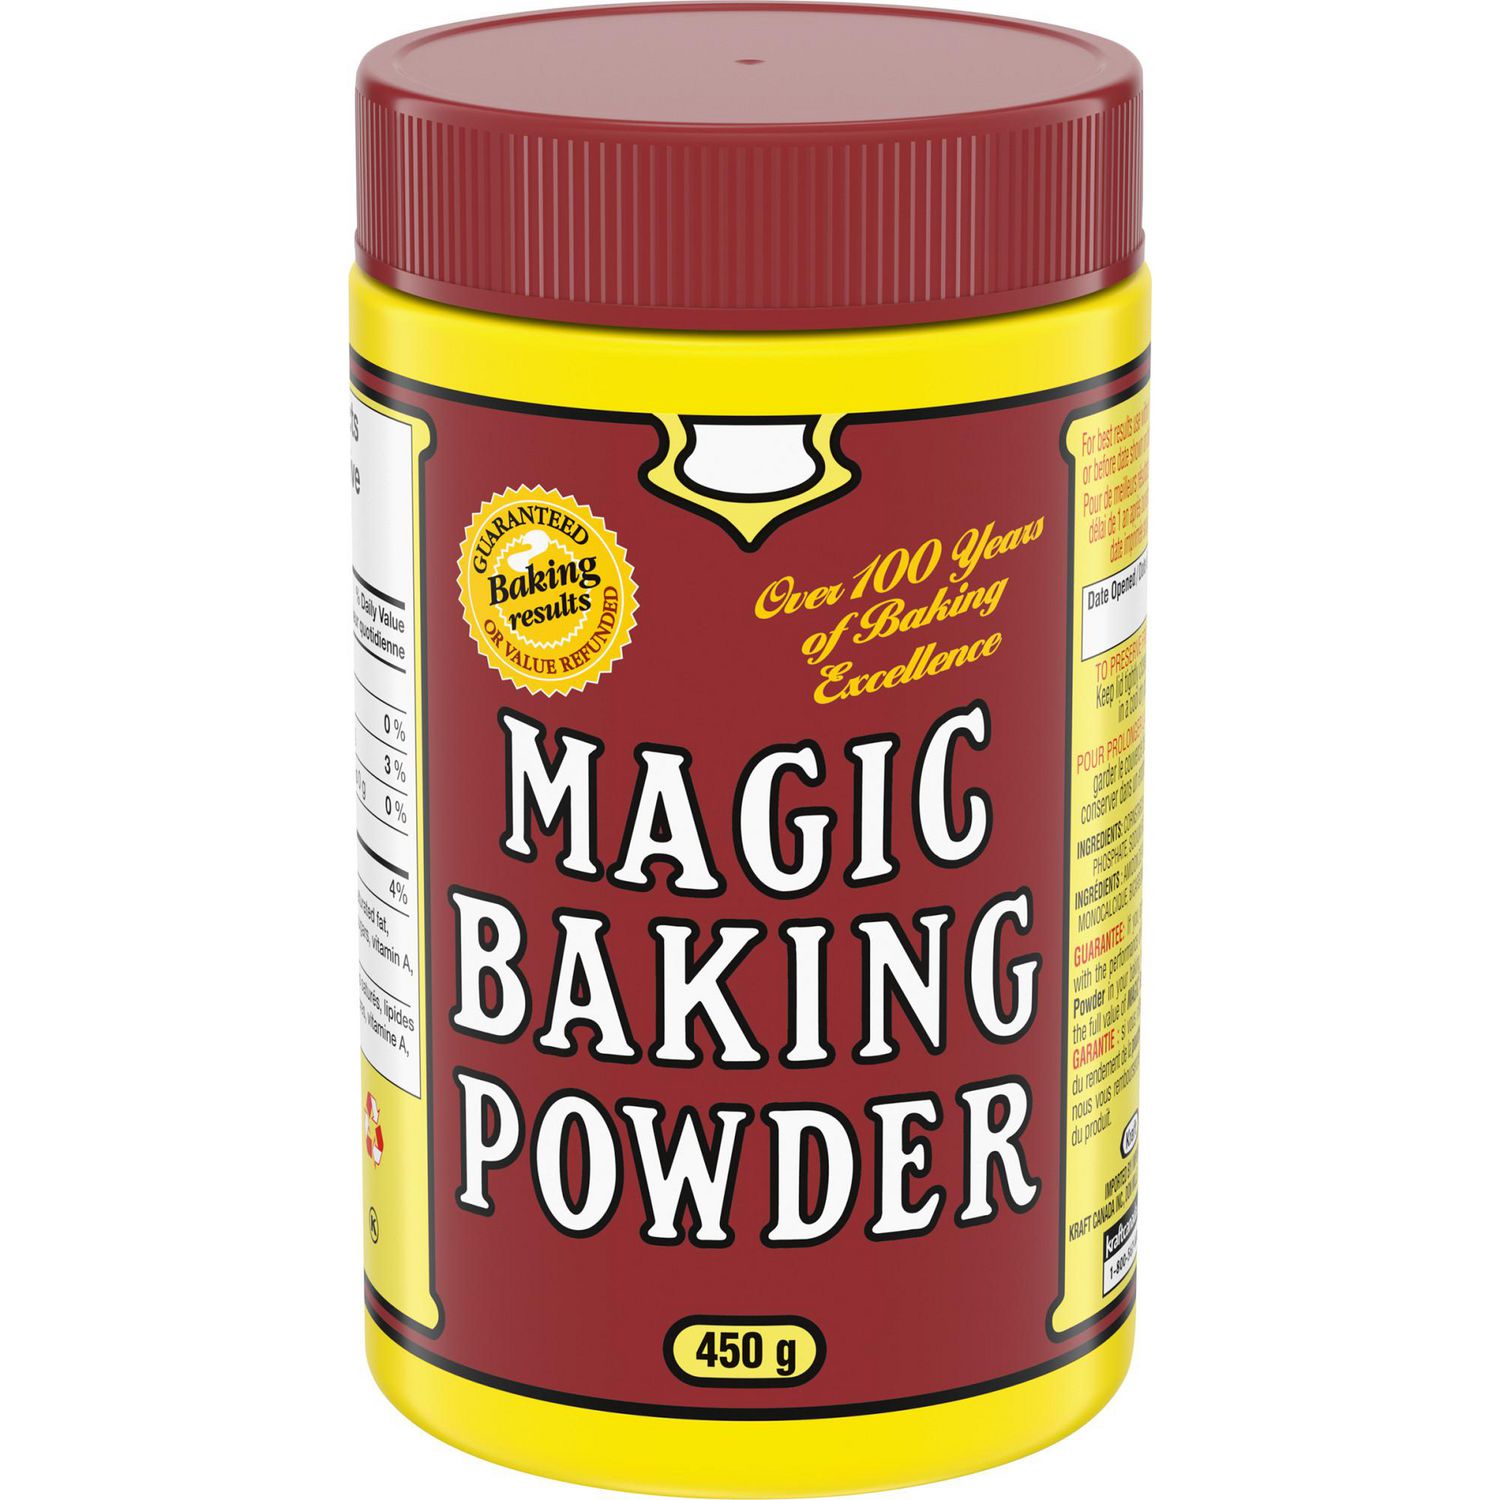 Baking powder перевод на русский. Baking Powder. Baking Powder of the Dough. Royal Baking Powder. Baking Powder *5.